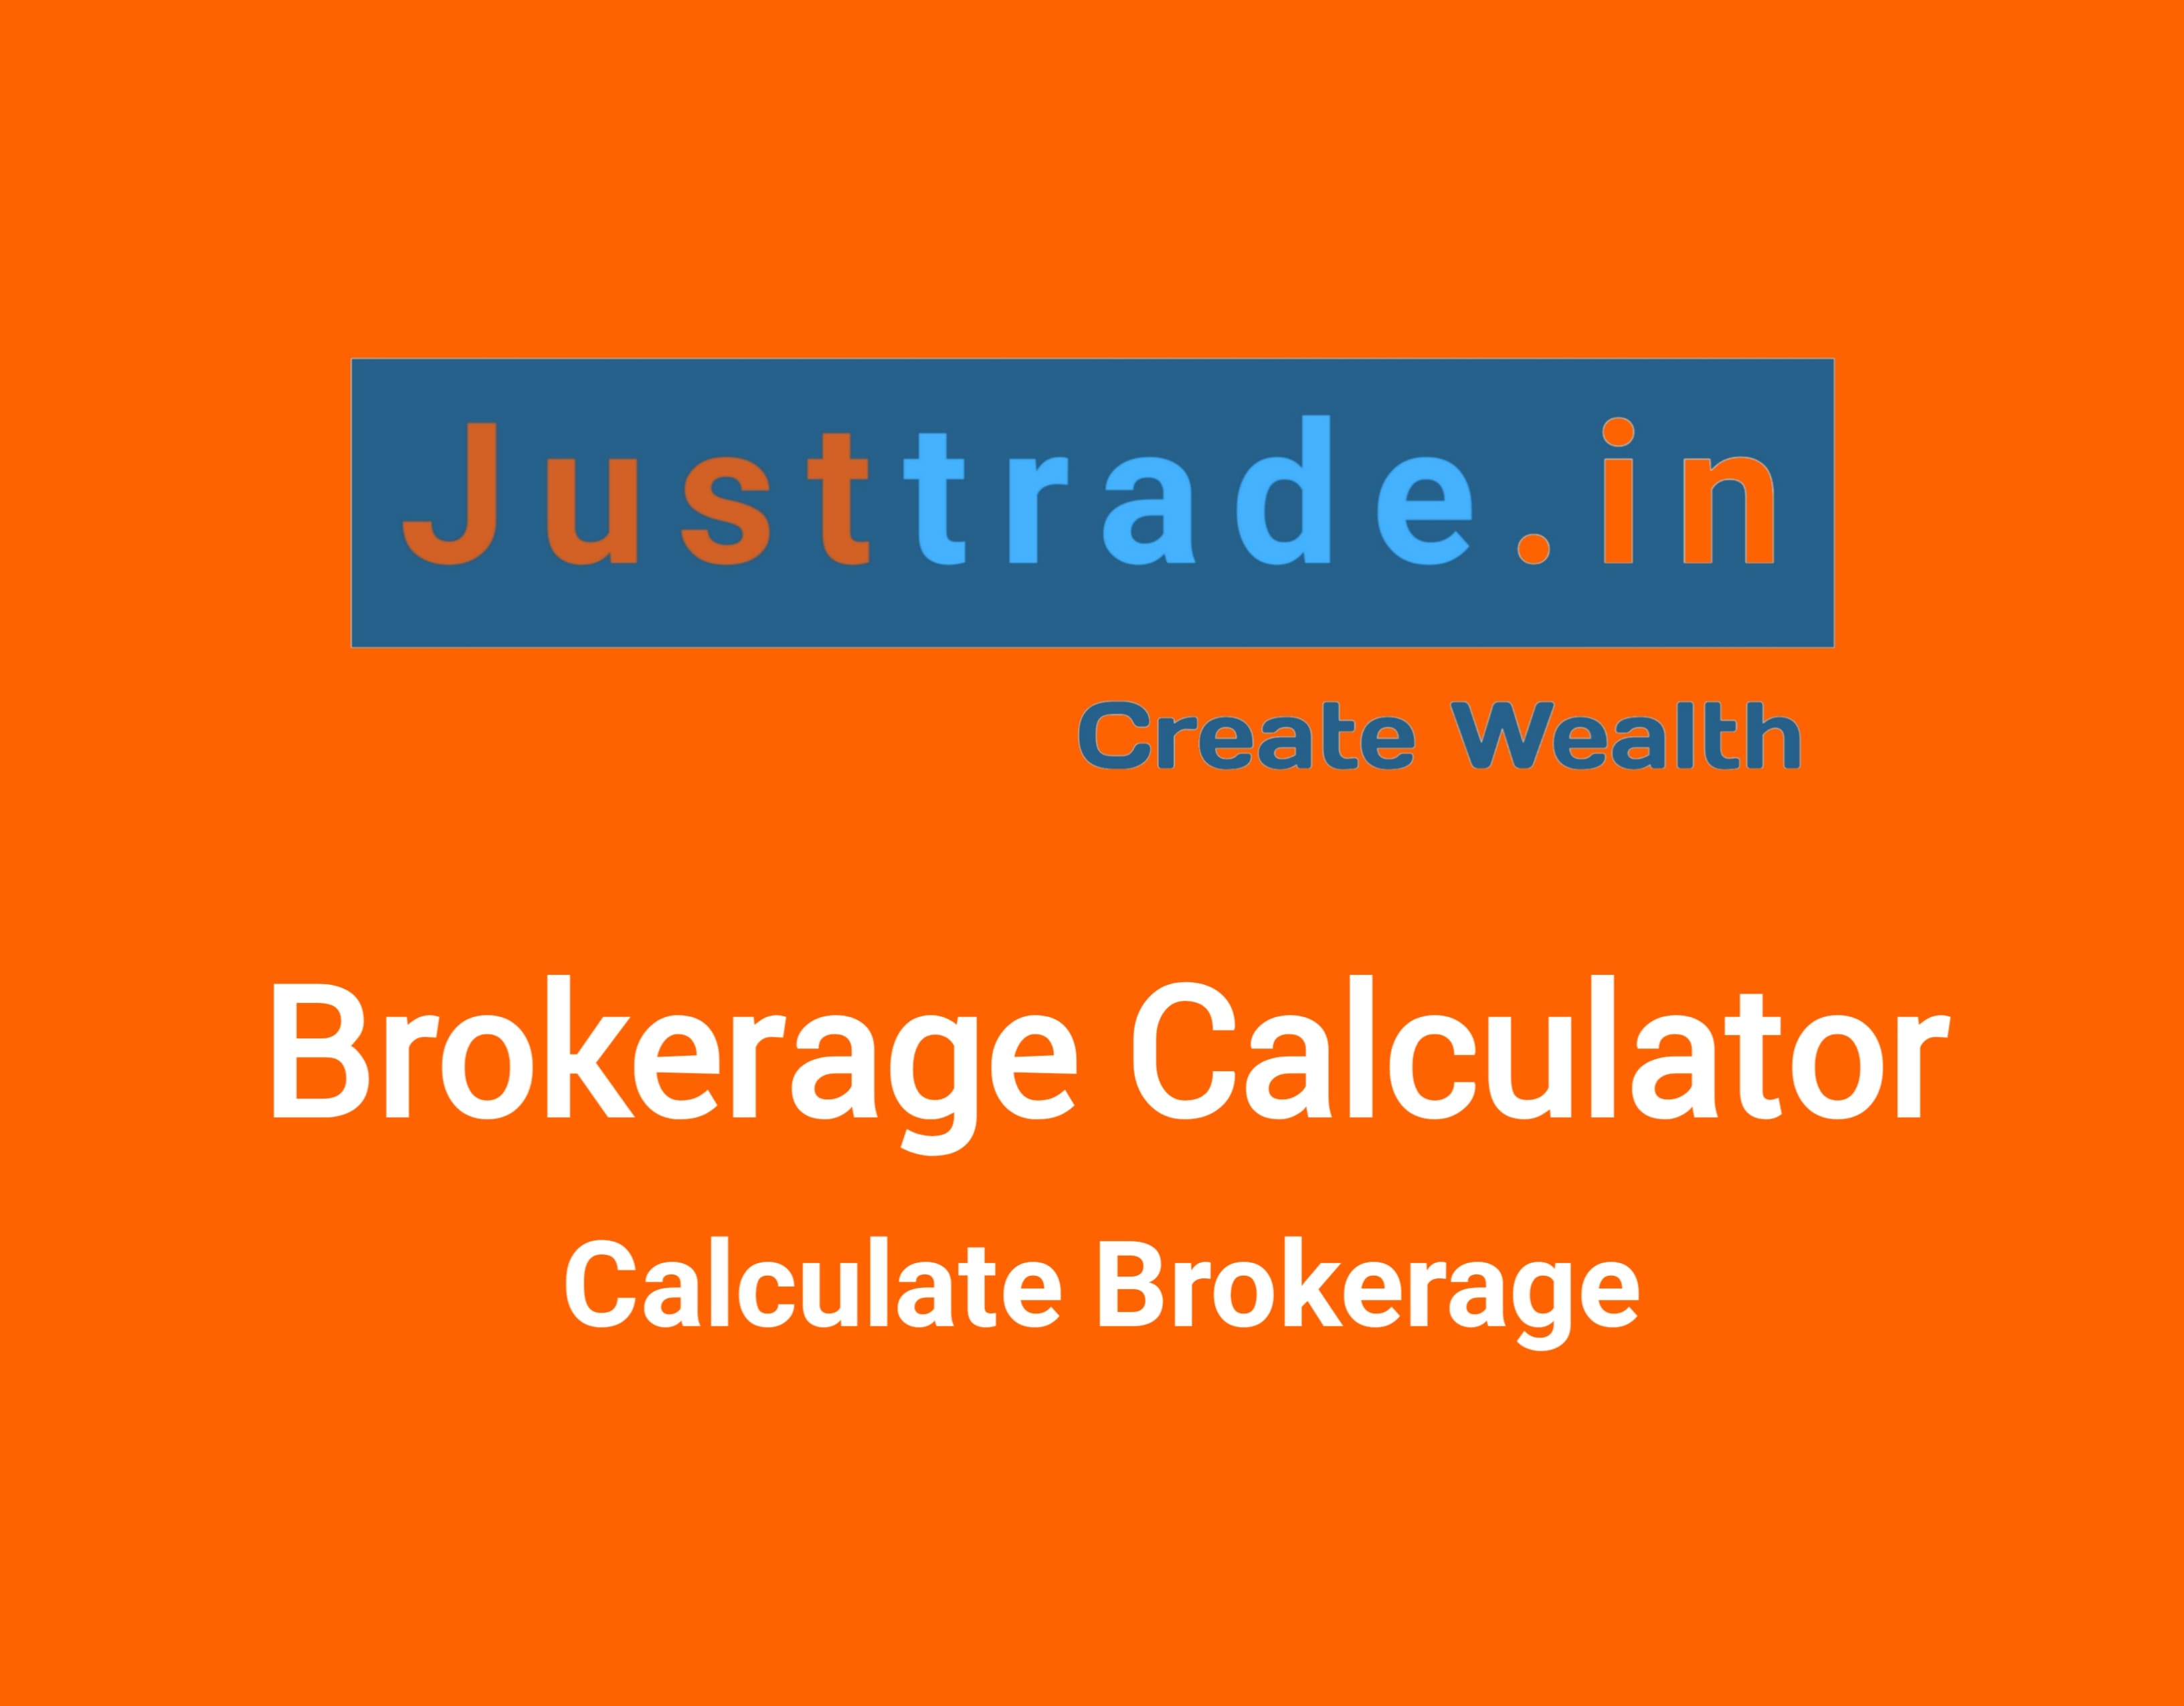 Just Trade Brokerage Calculator